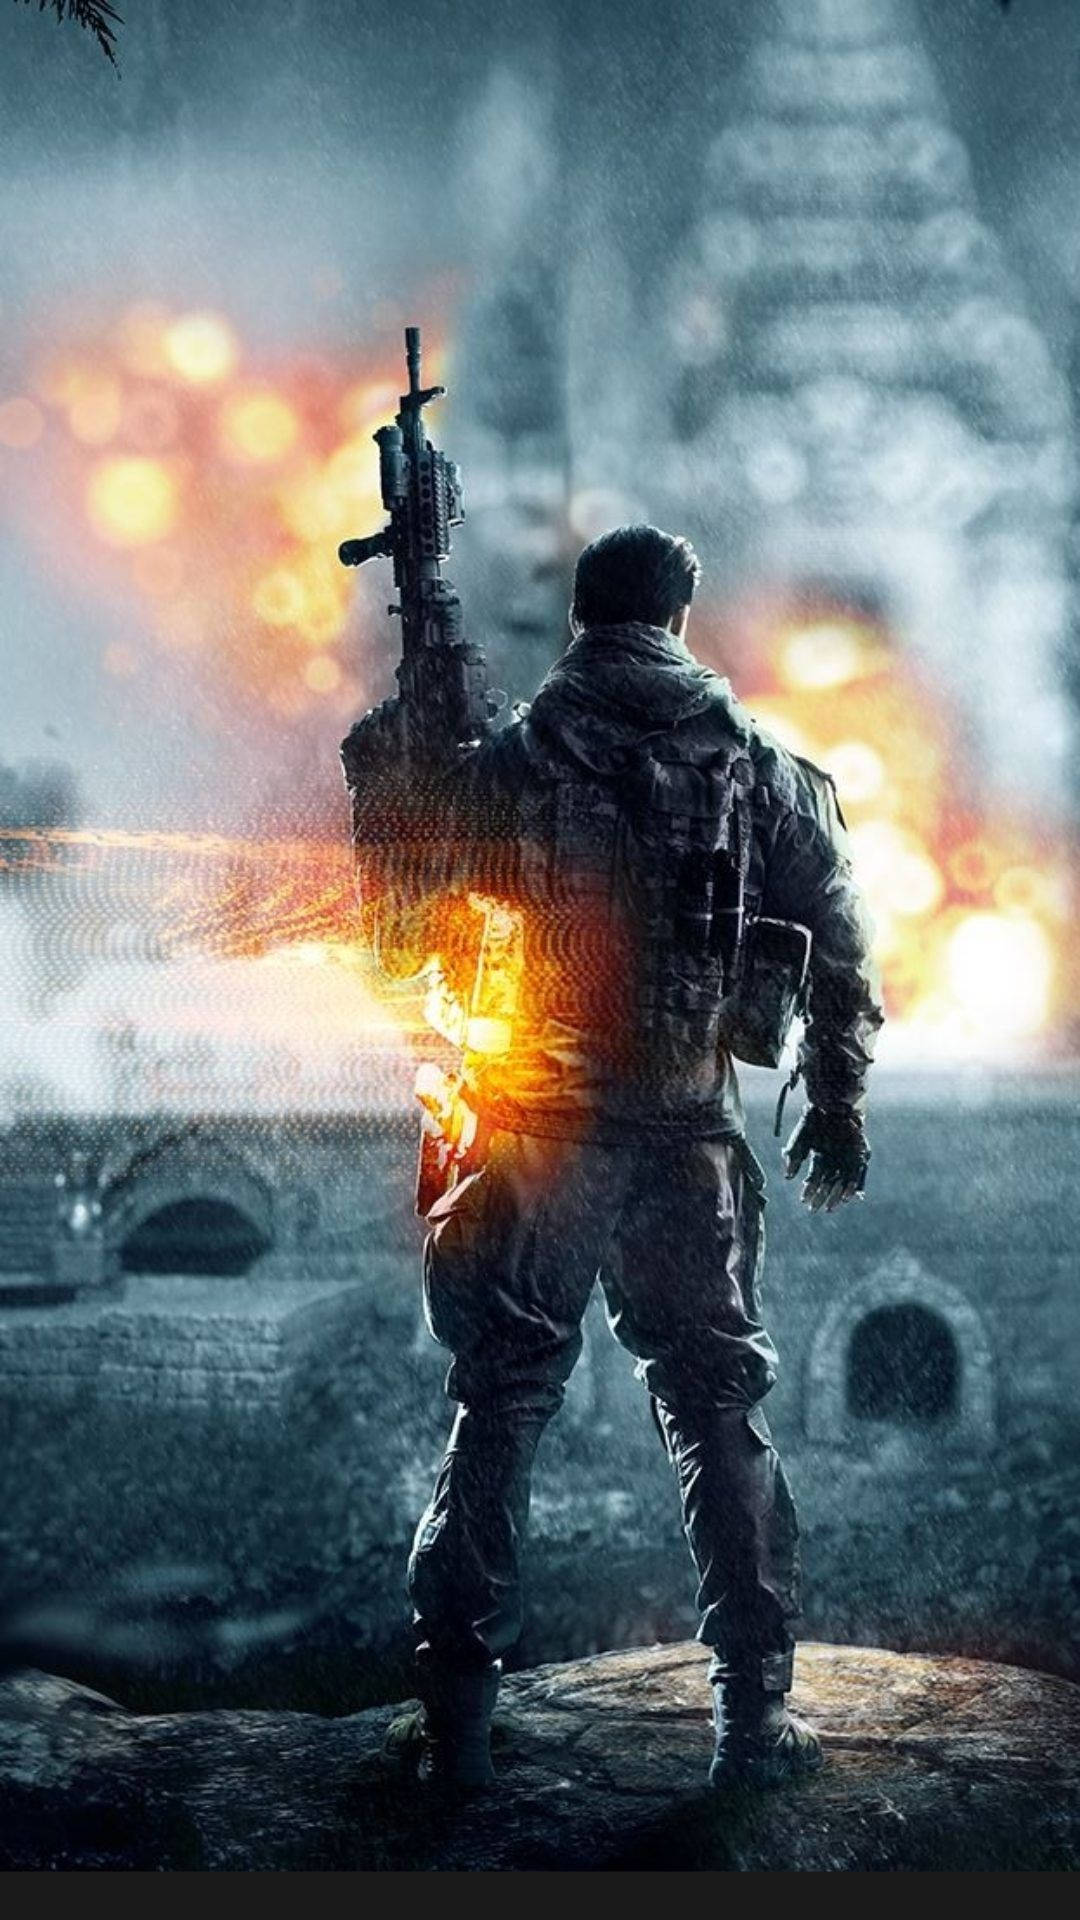 Iphonegaming Battlefield 4 Soldat Wallpaper